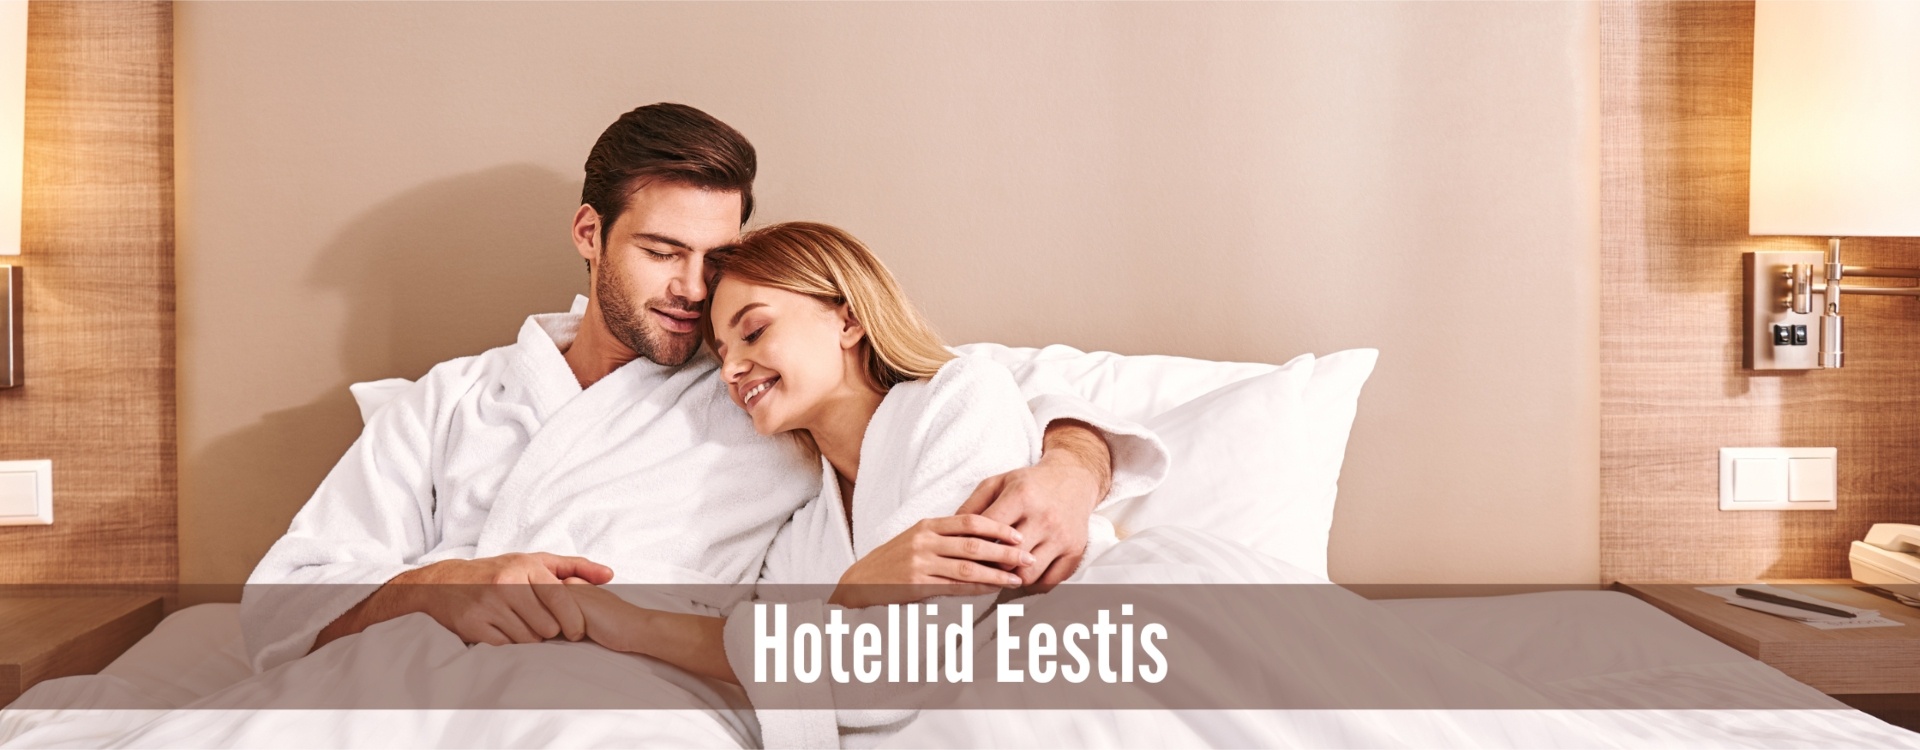 Hotellid Eestis